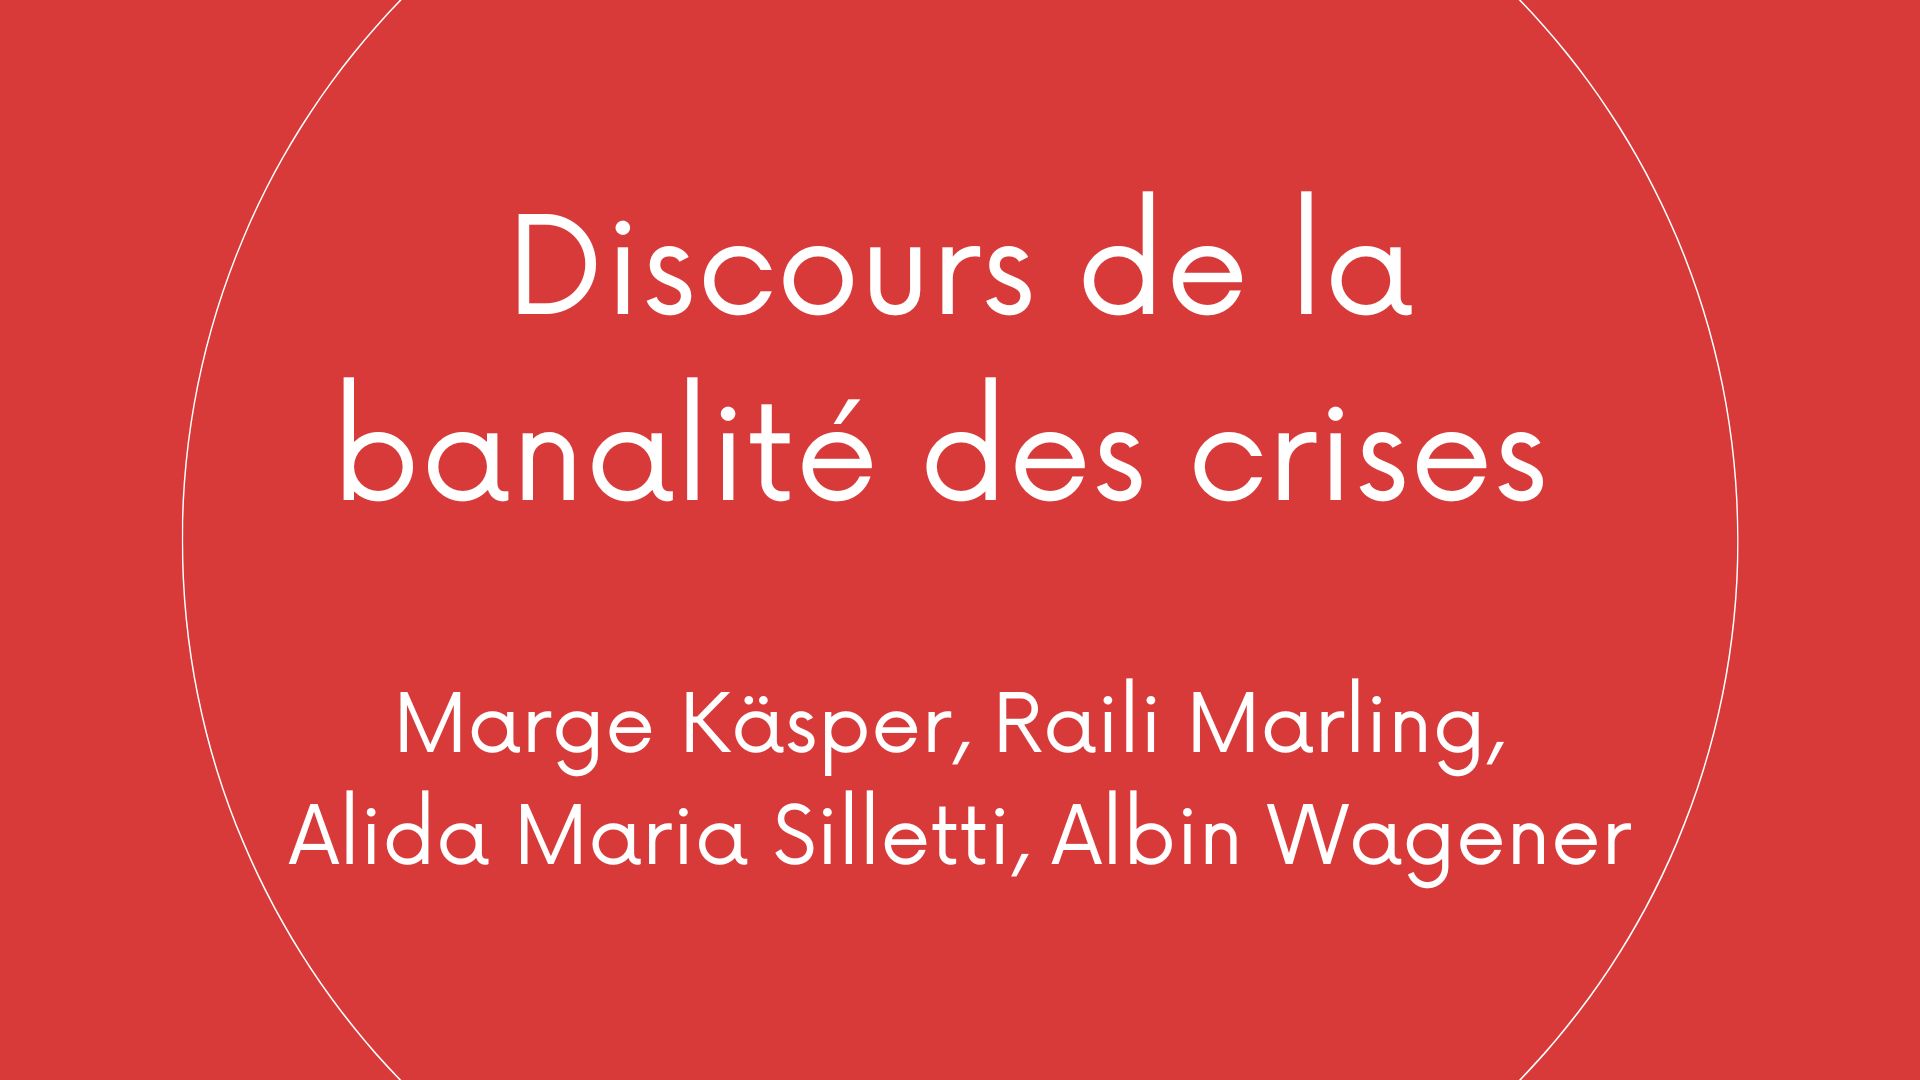 Discourses of crisis ordinariness-fr